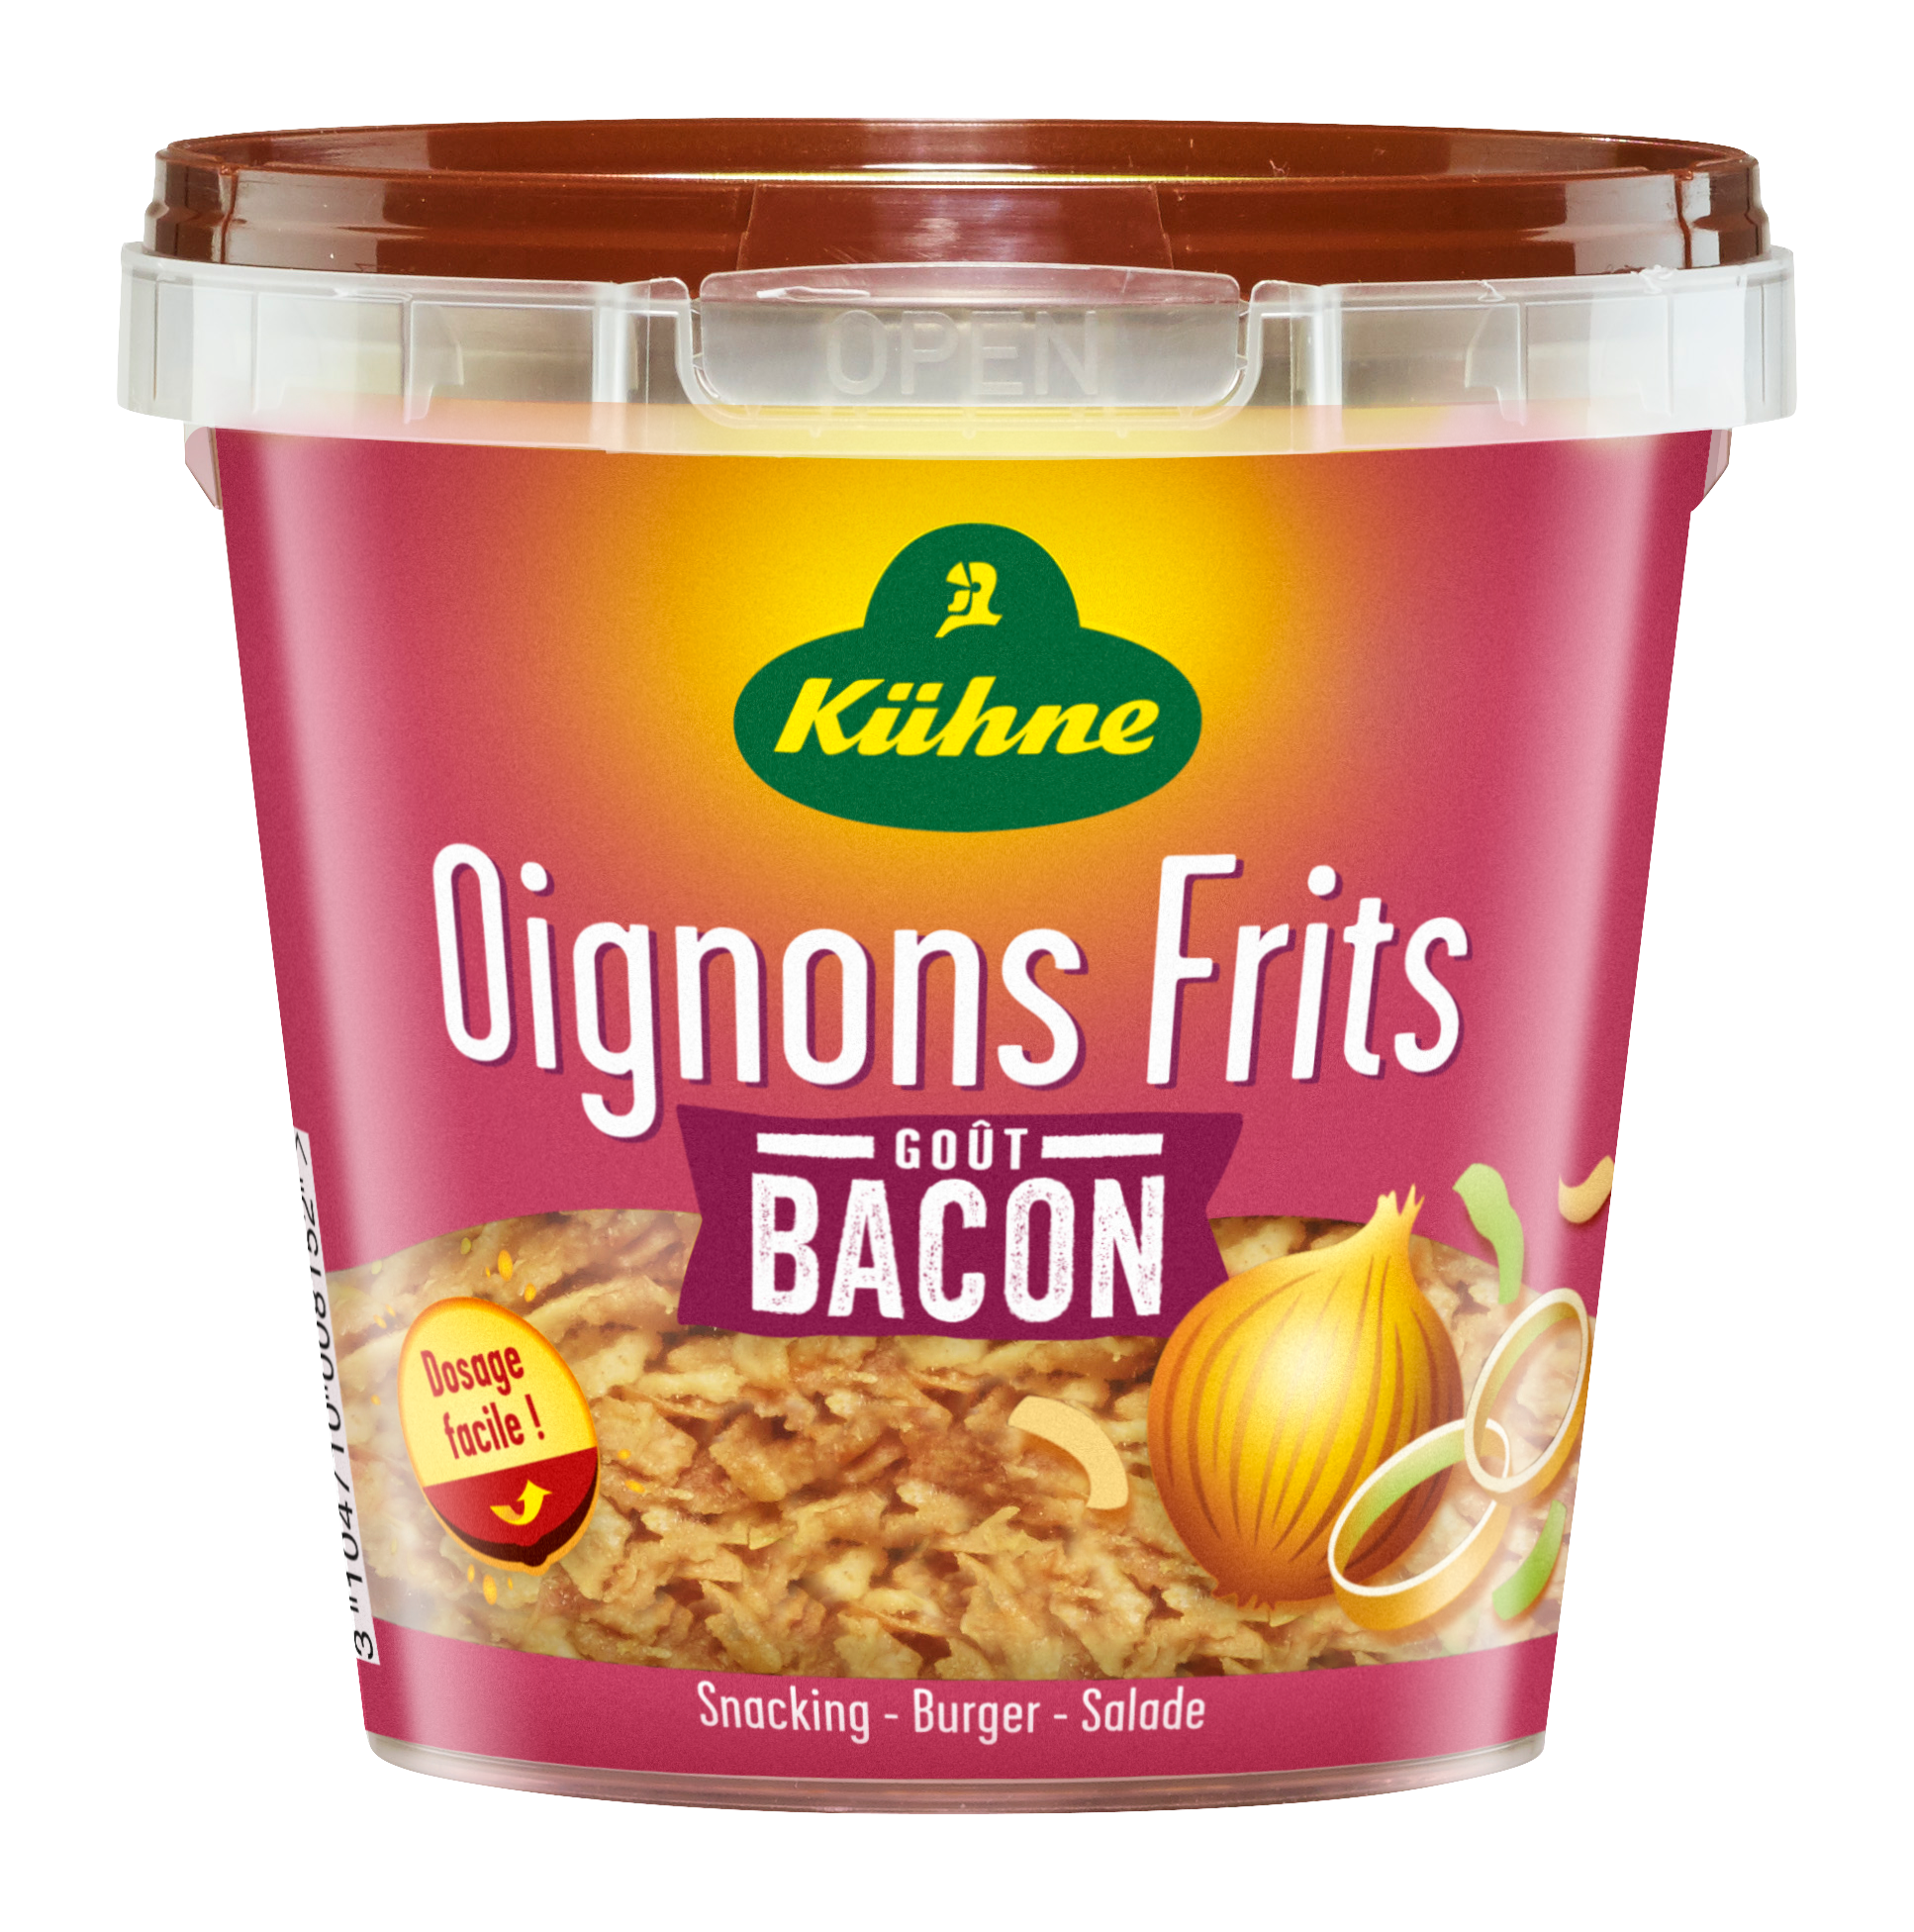 KUHNE Oignons frits goût bacon 100g pas cher 